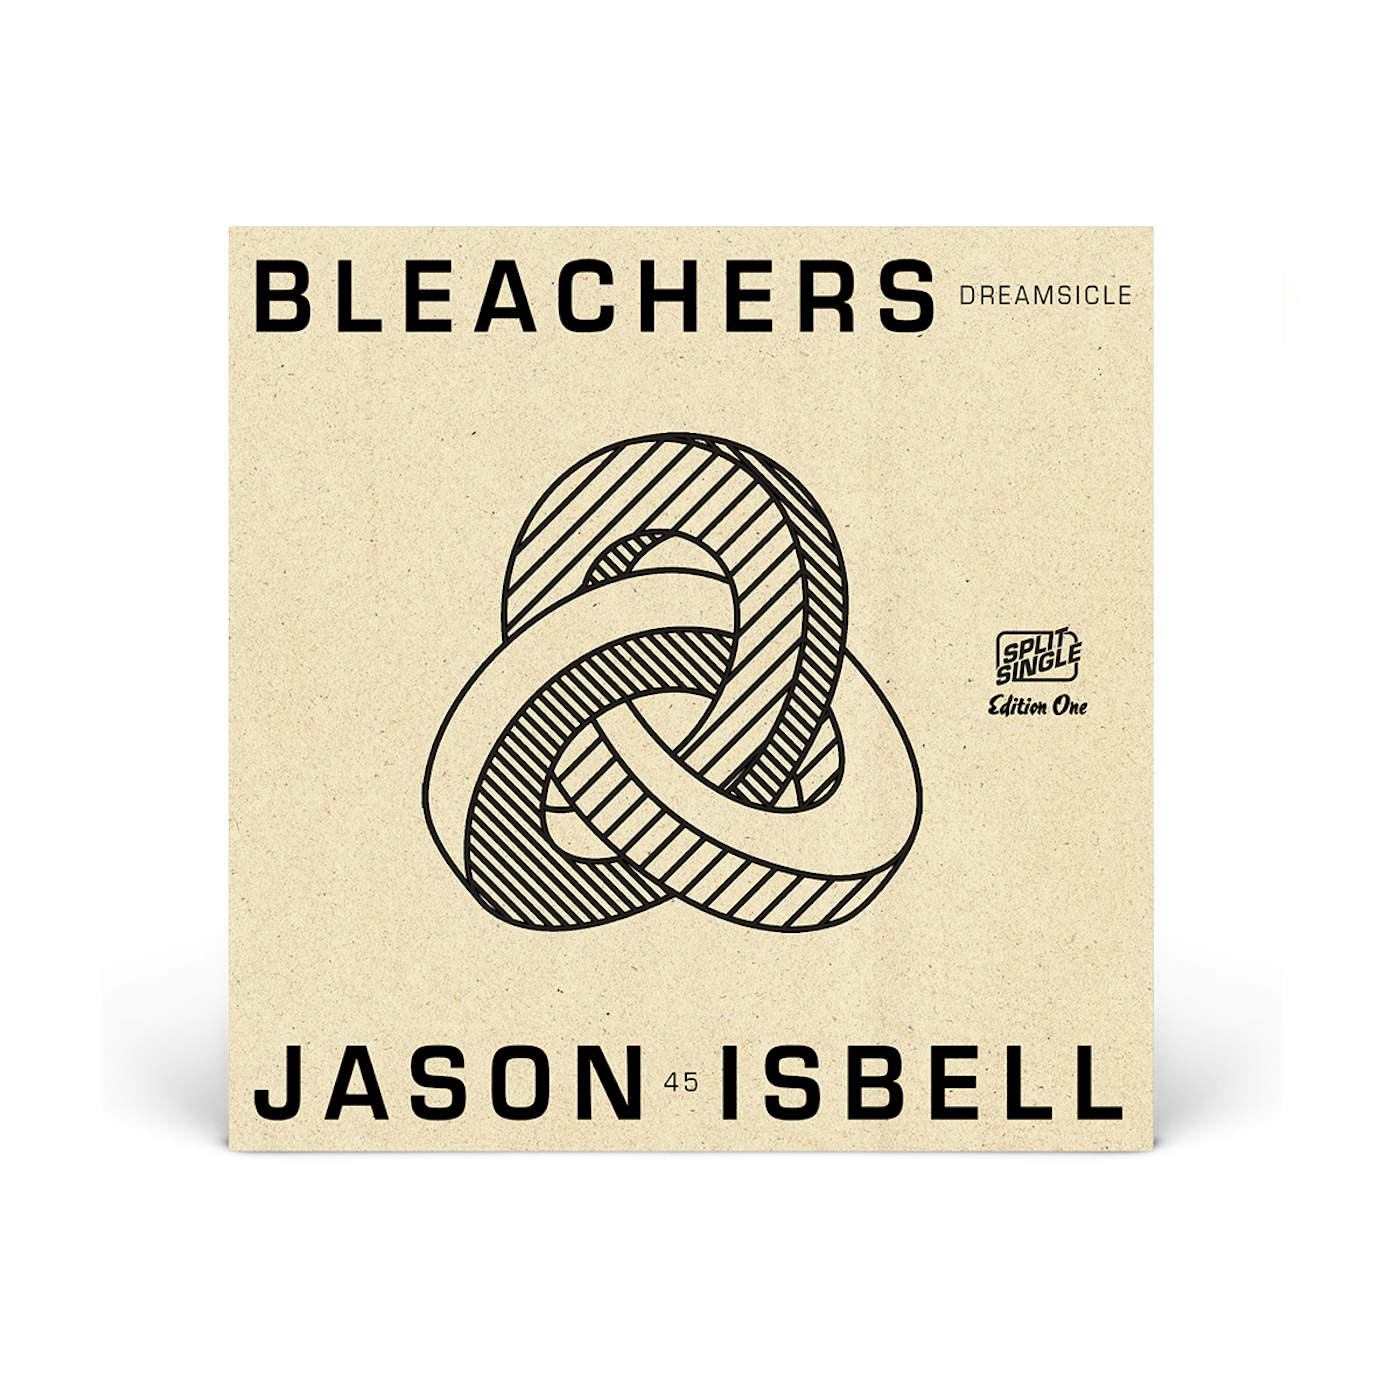 BLEACHERS X JASON ISBELL 7” VINYL - DREAMSICLE B/W 45